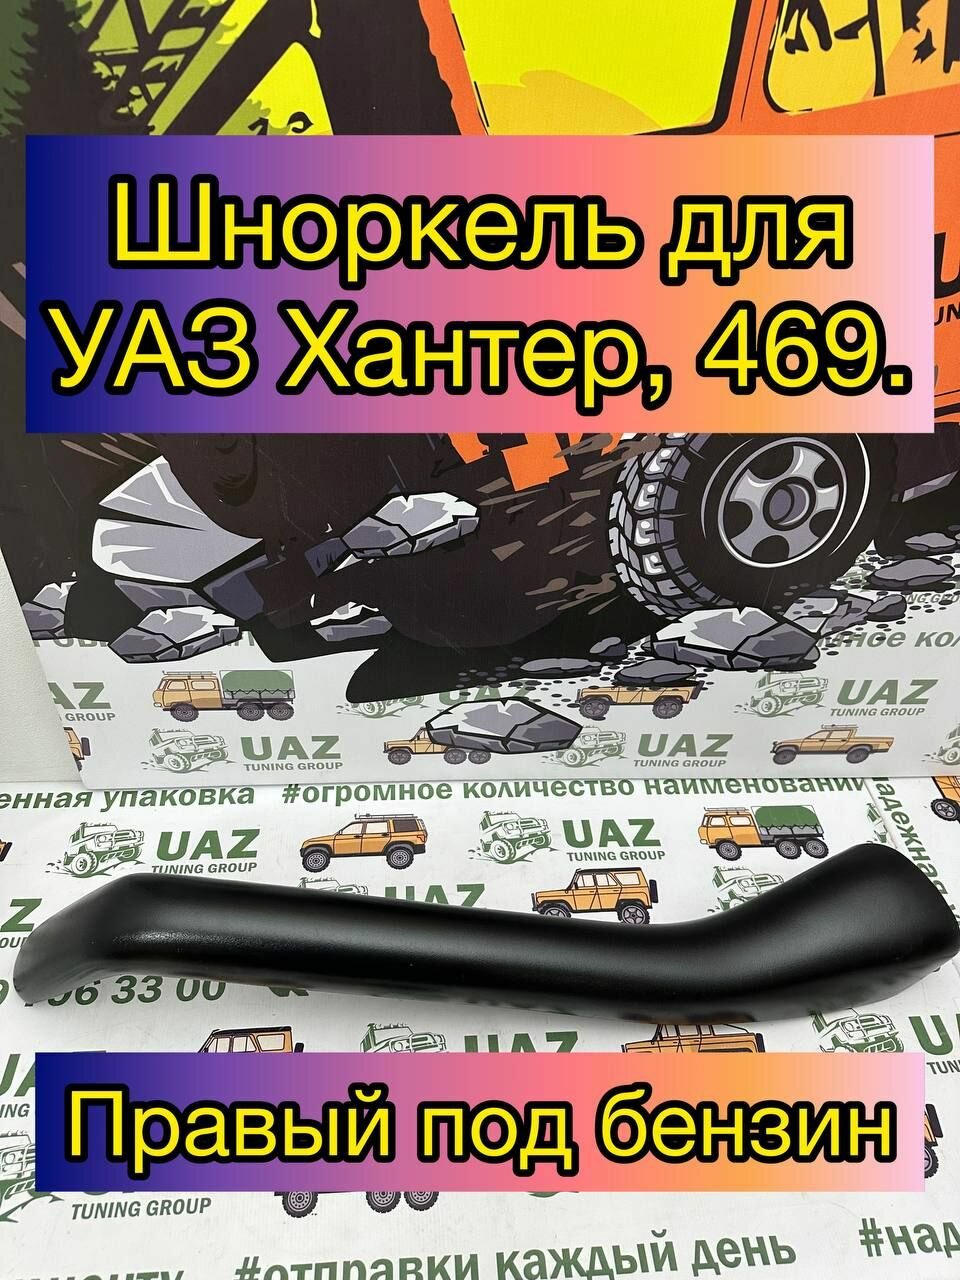 Шноркель УАЗ 469 Хантер (Правый под бензин)